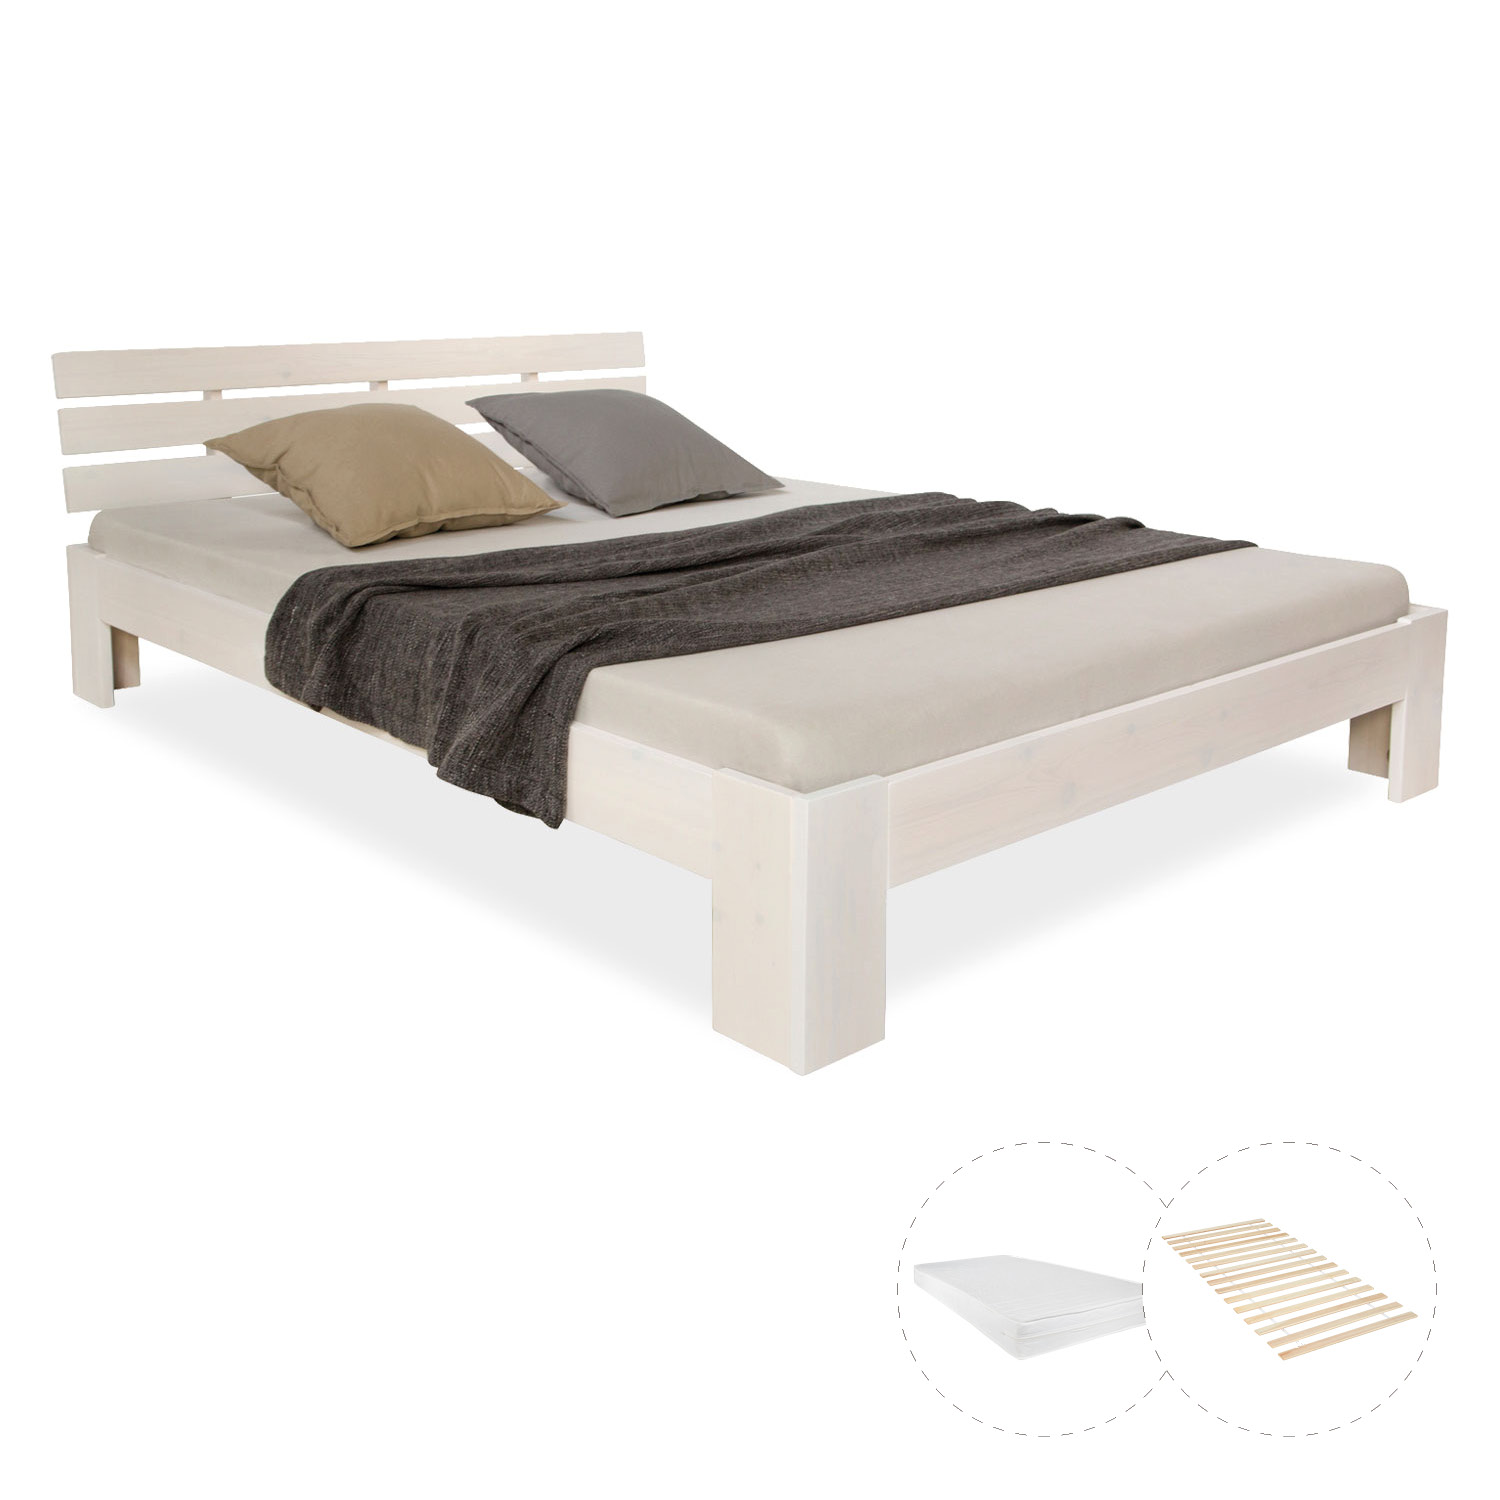 Doppelbett mit Matratze und Lattenrost 120x200 Bett Weiß Kiefer Massiv Bettgestell Holzbett Futonbett